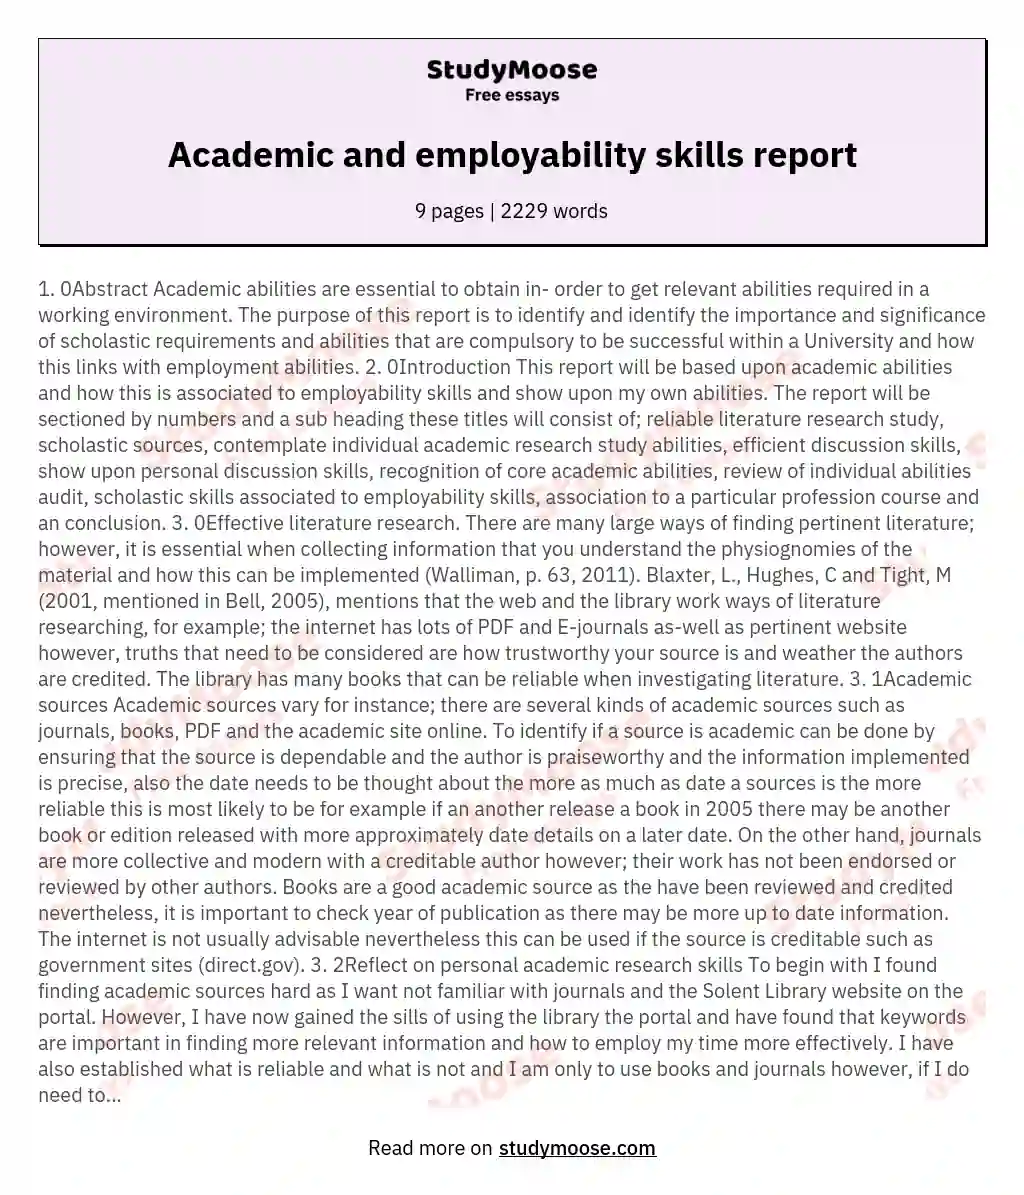 Academic and employability skills report